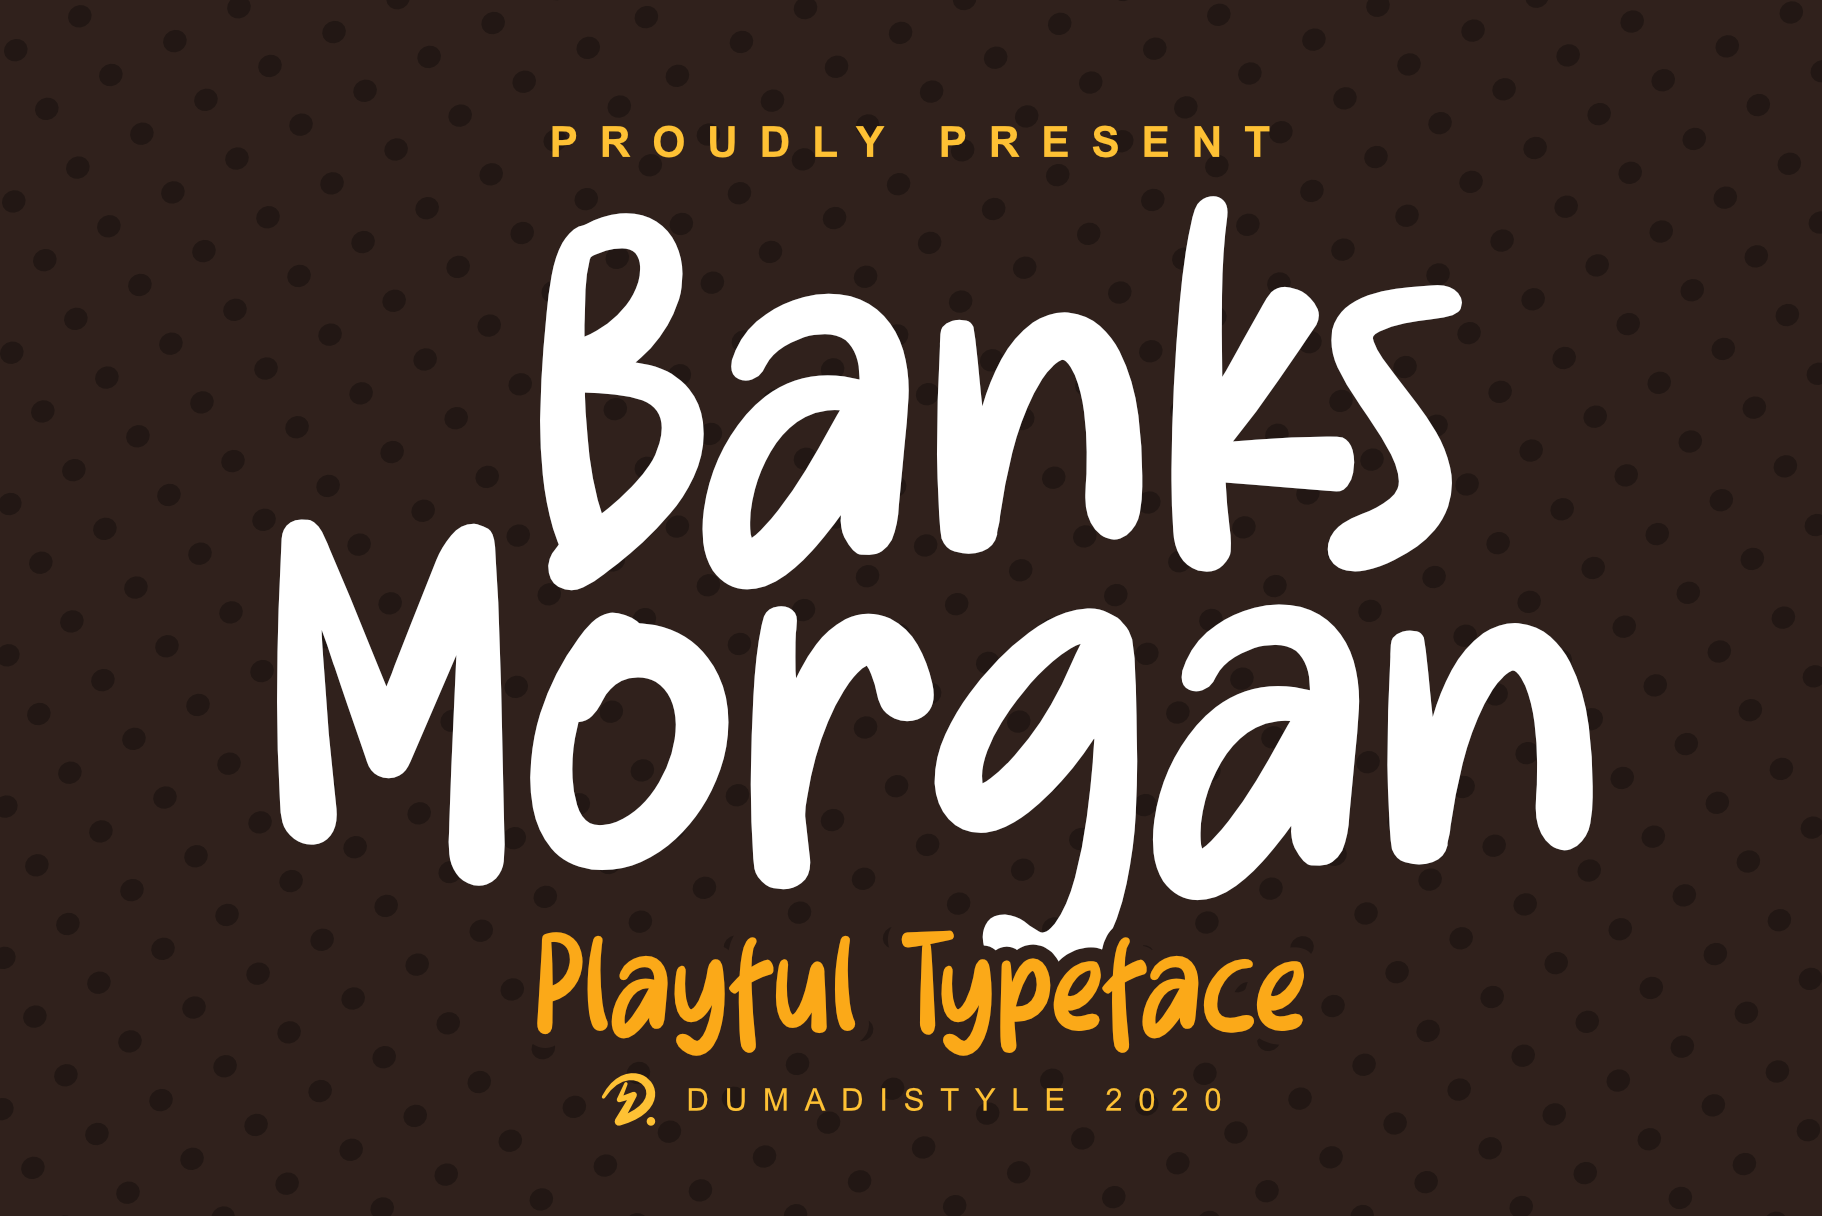 Banks Morgan